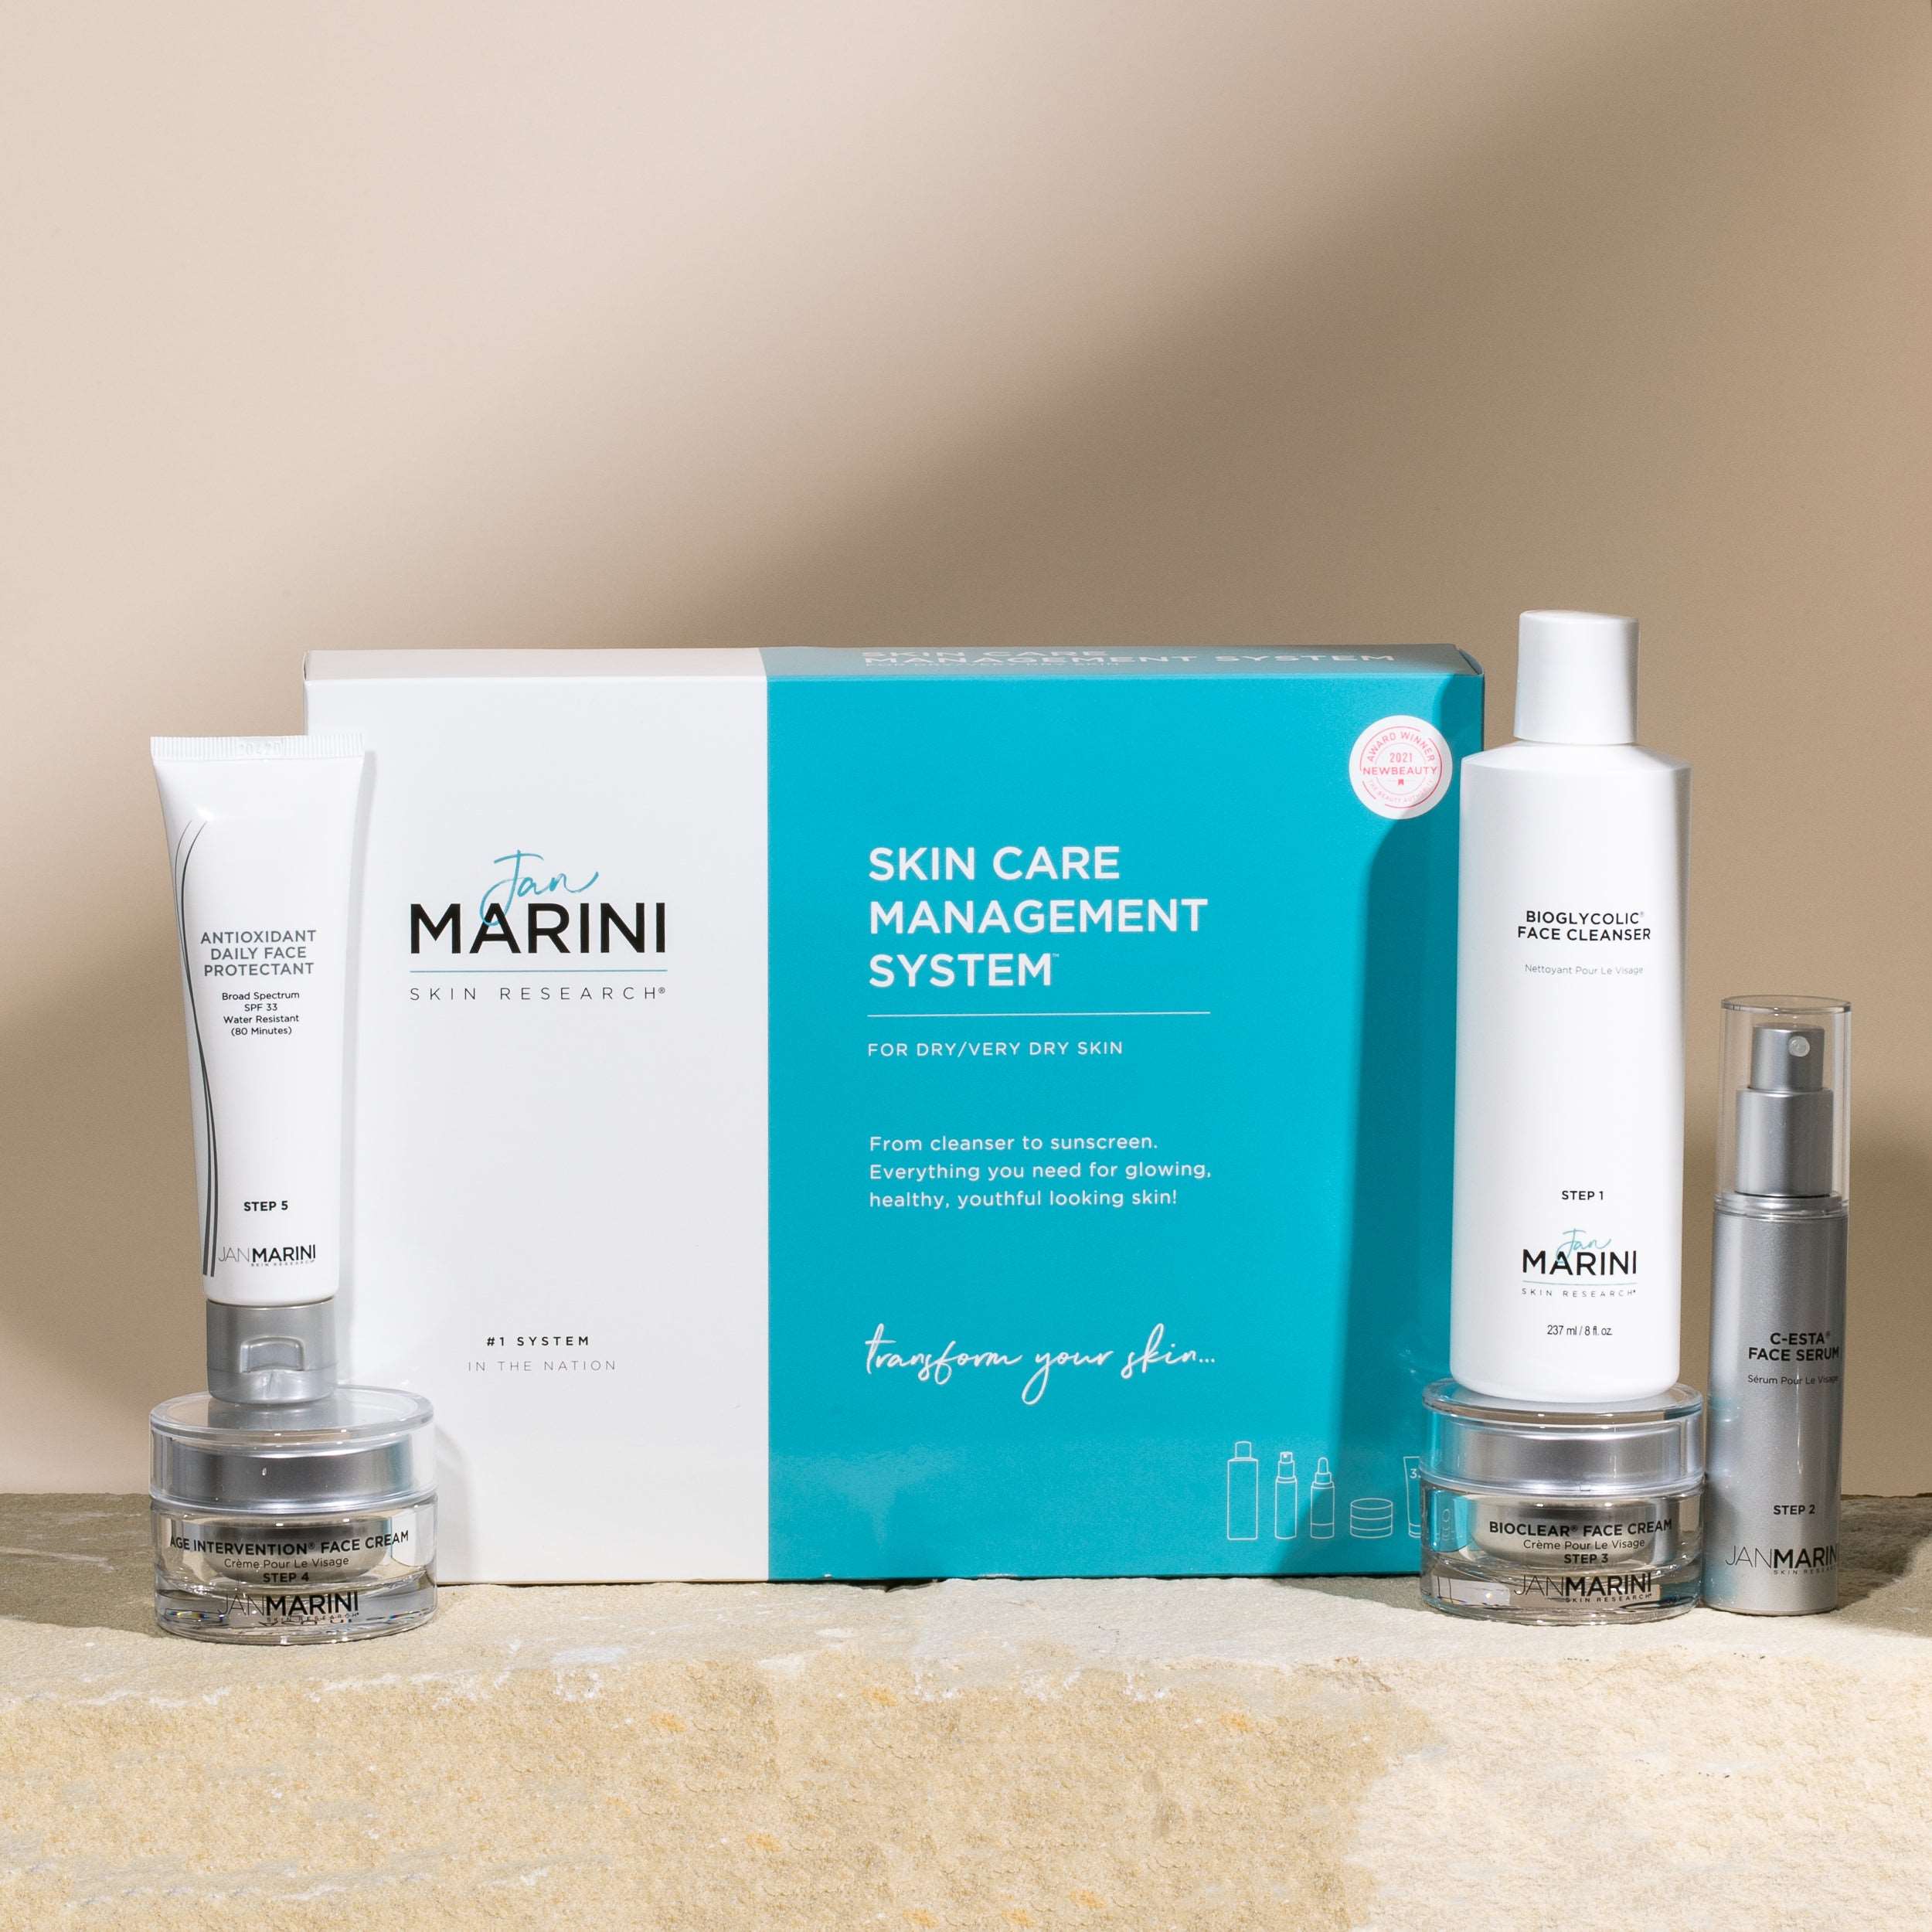 Jan Marini Skin Care Management System- Dry/Very Dry Jan Marini